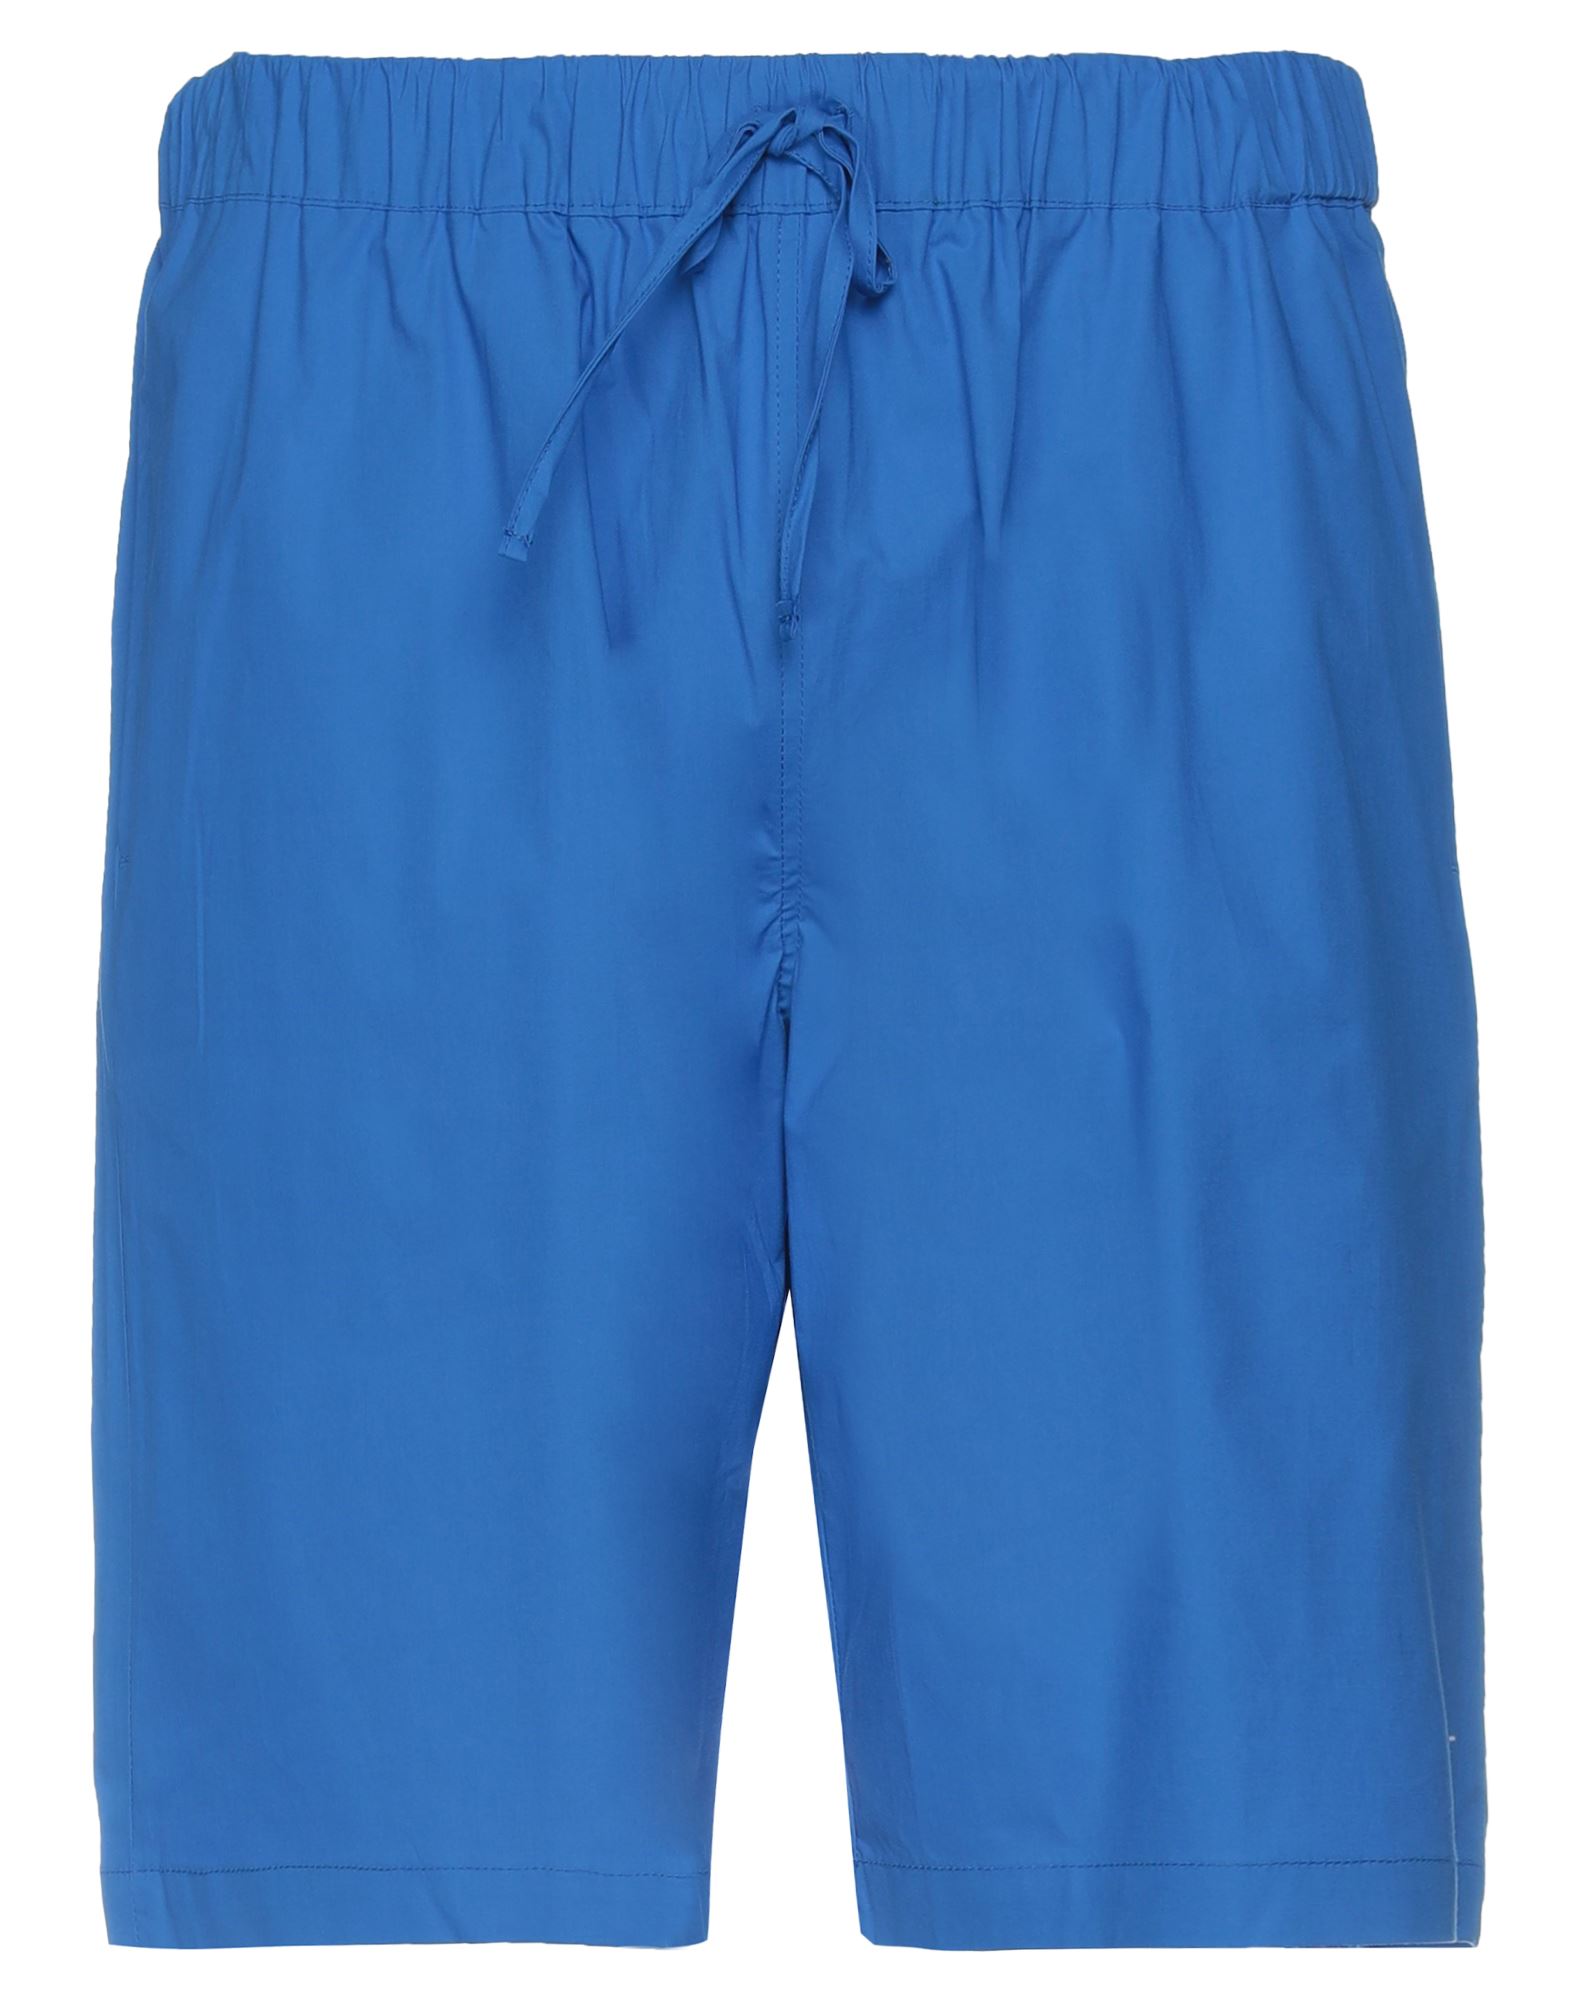 LOREAK MENDIAN Shorts & Bermuda Shorts